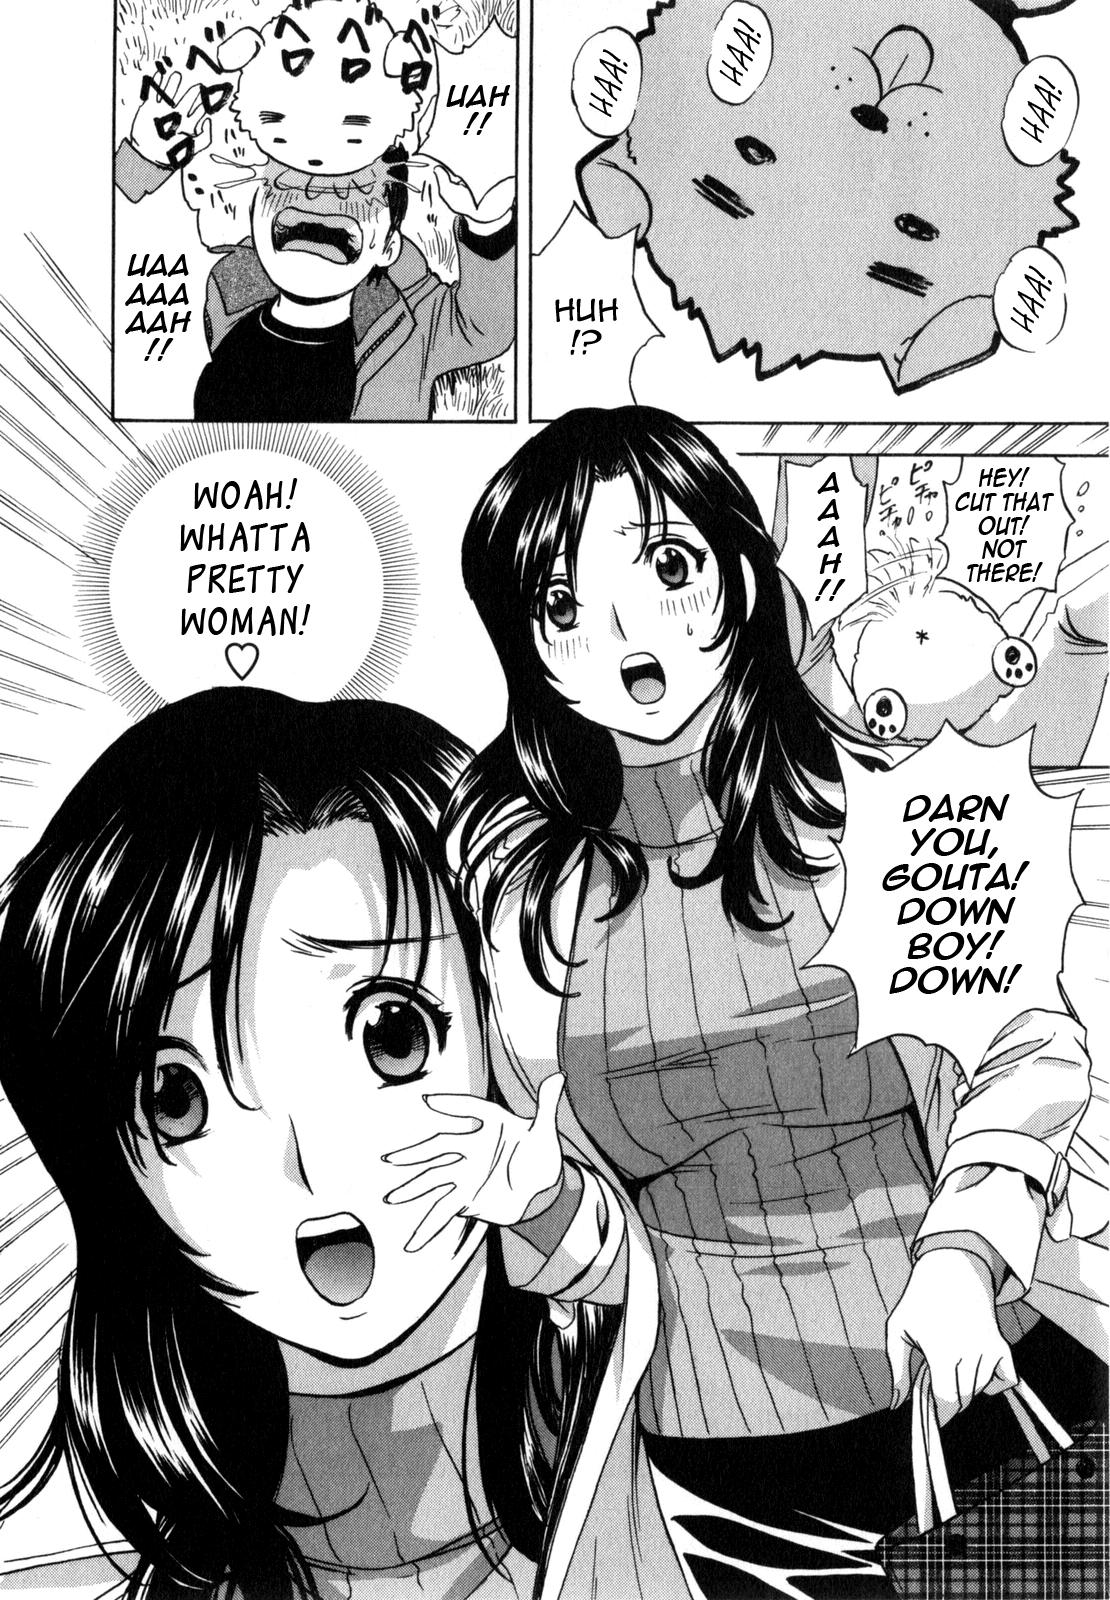 [Hidemaru] Life with Married Women Just Like a Manga 1 - Ch. 1-8 [English] {Tadanohito} 10